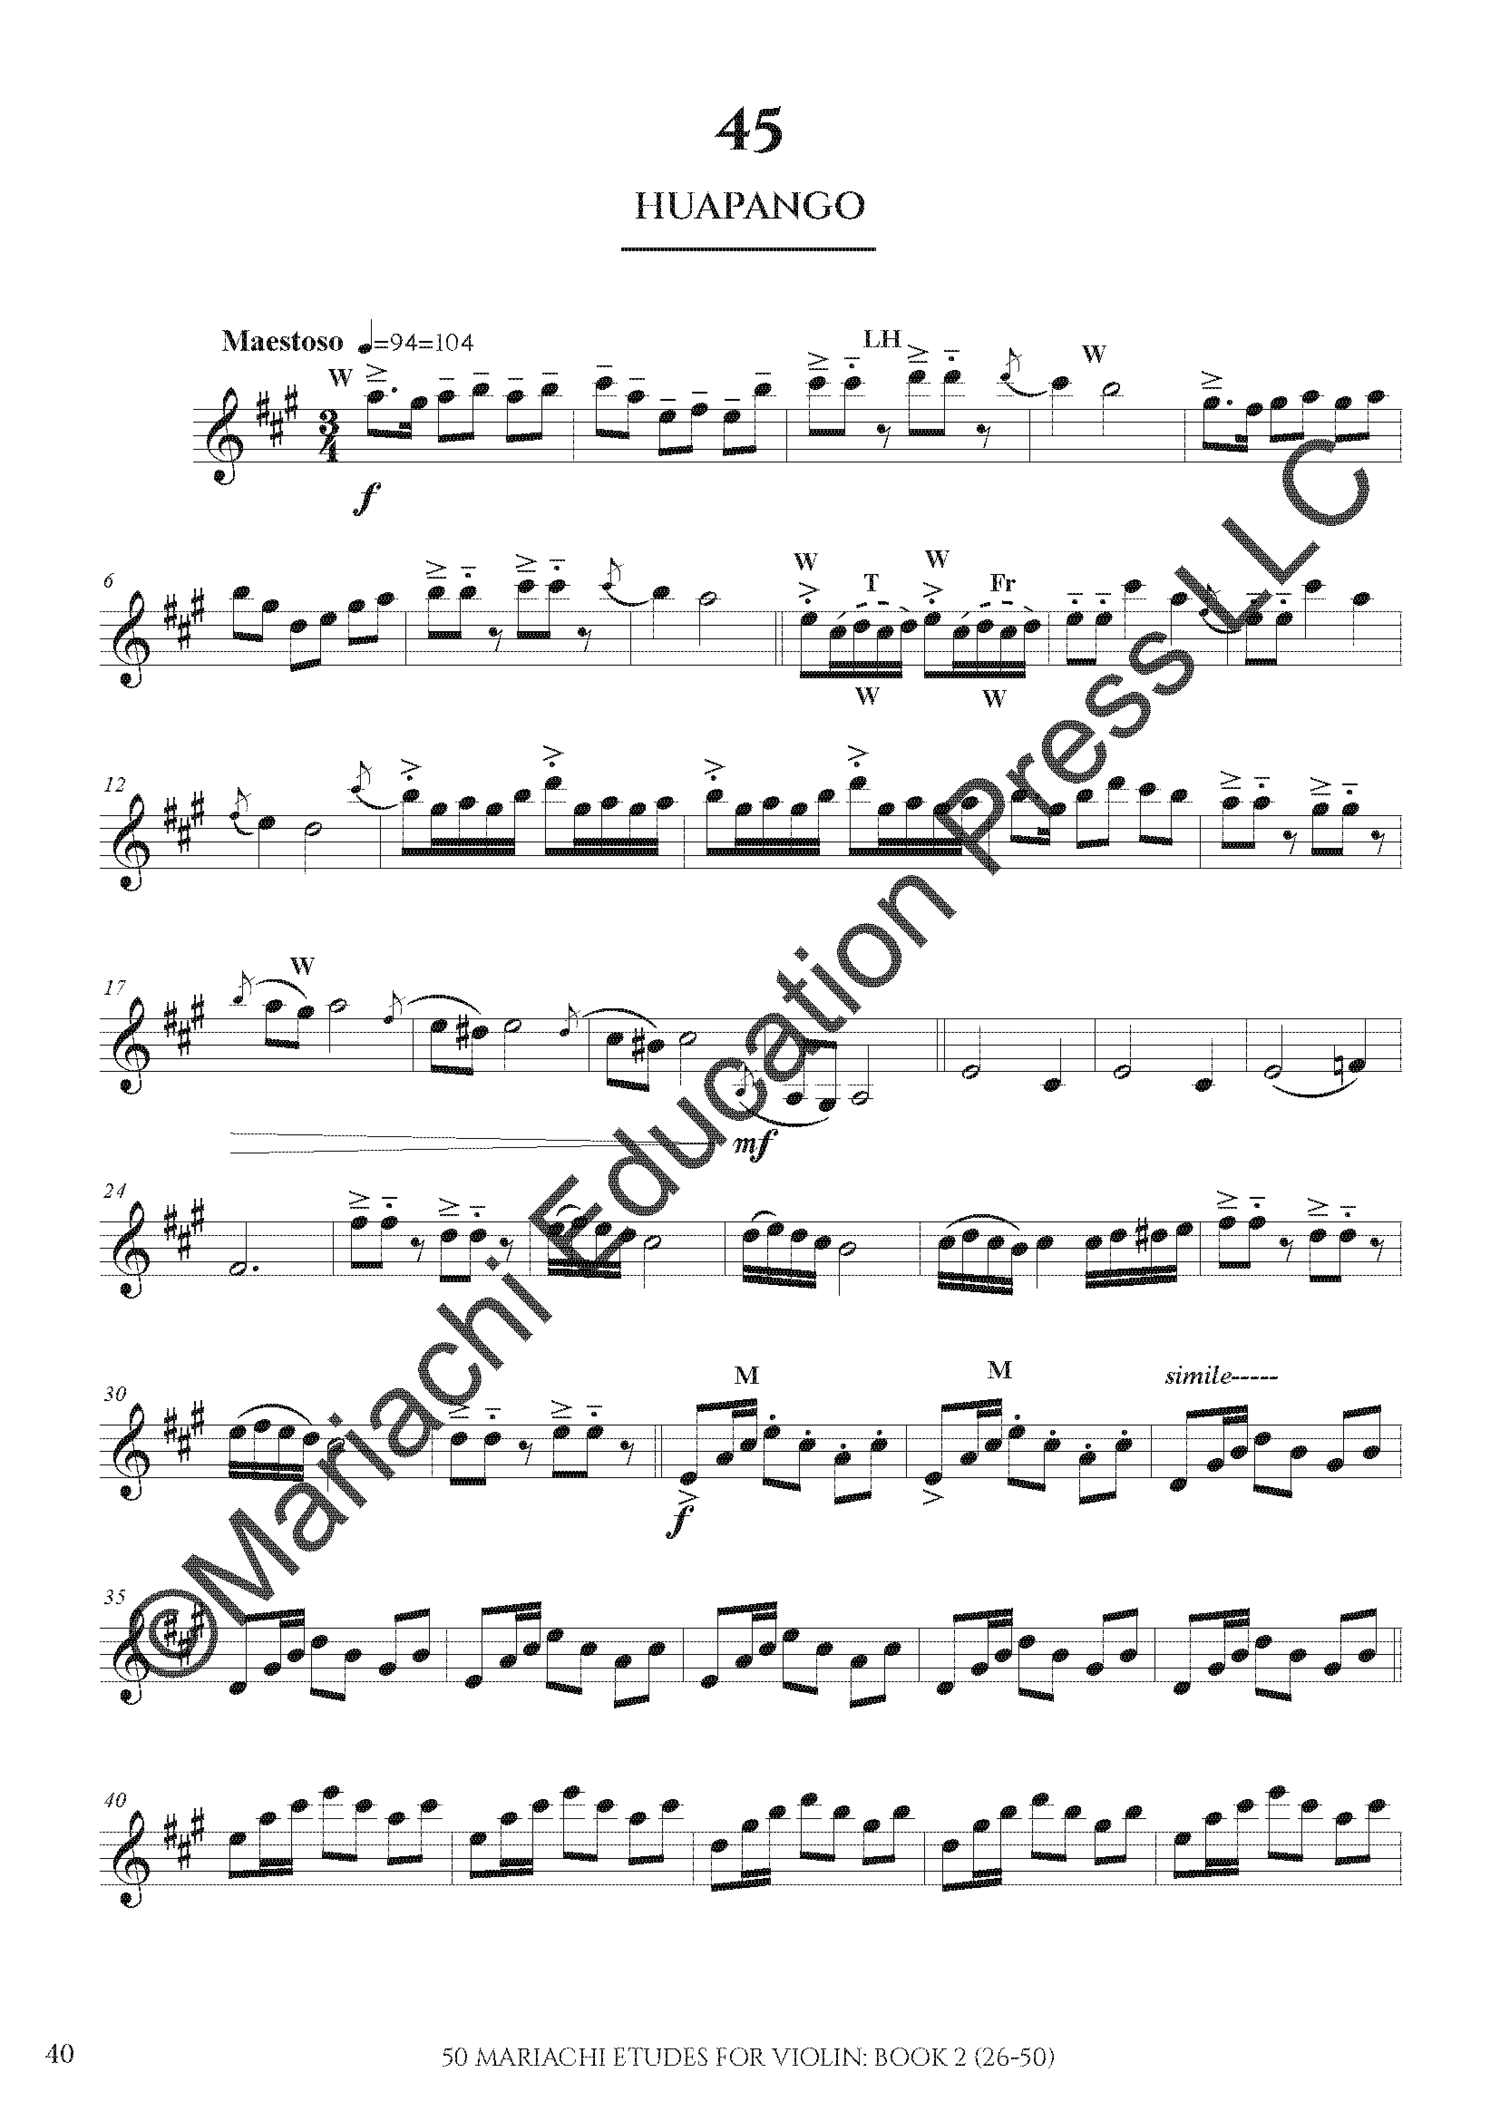 50 Etudes for Violin: Book 2 (26-50) — Mariachi LLC